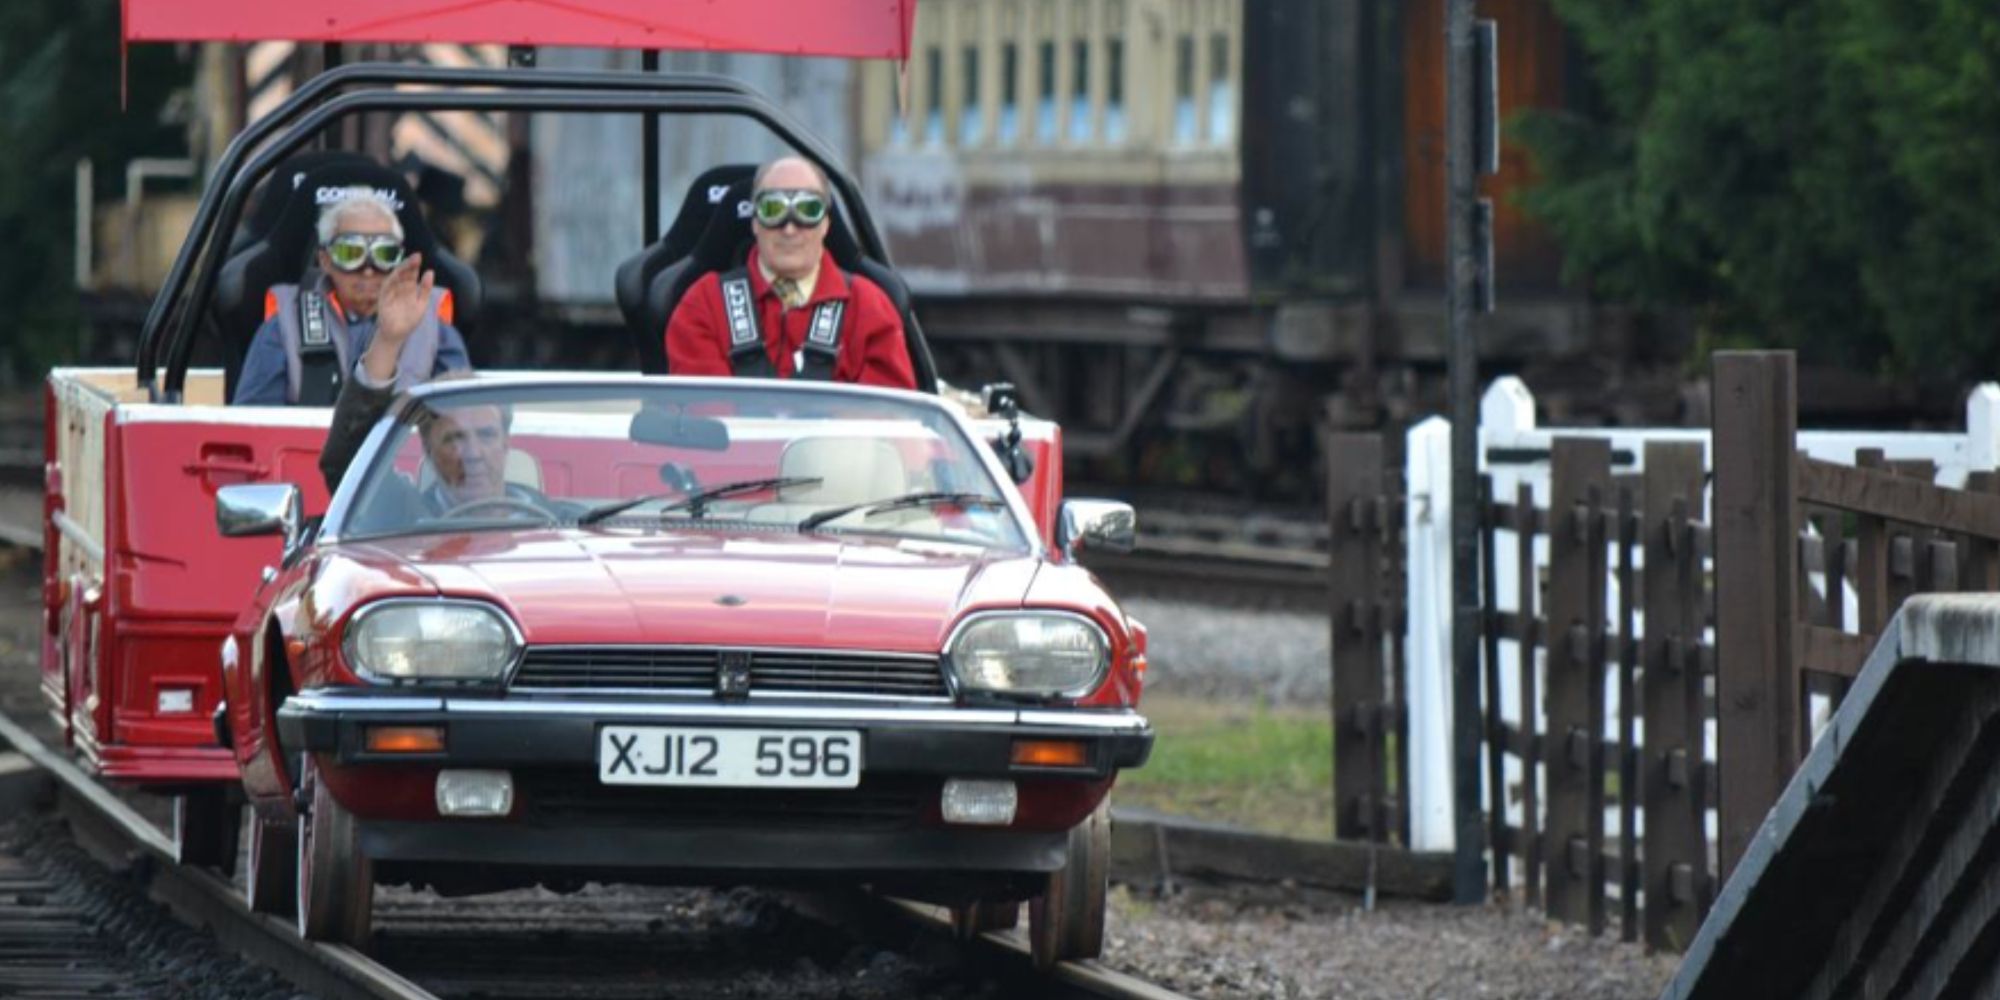 The trio makes modified trains in Top Gear Season 17, Episode 4